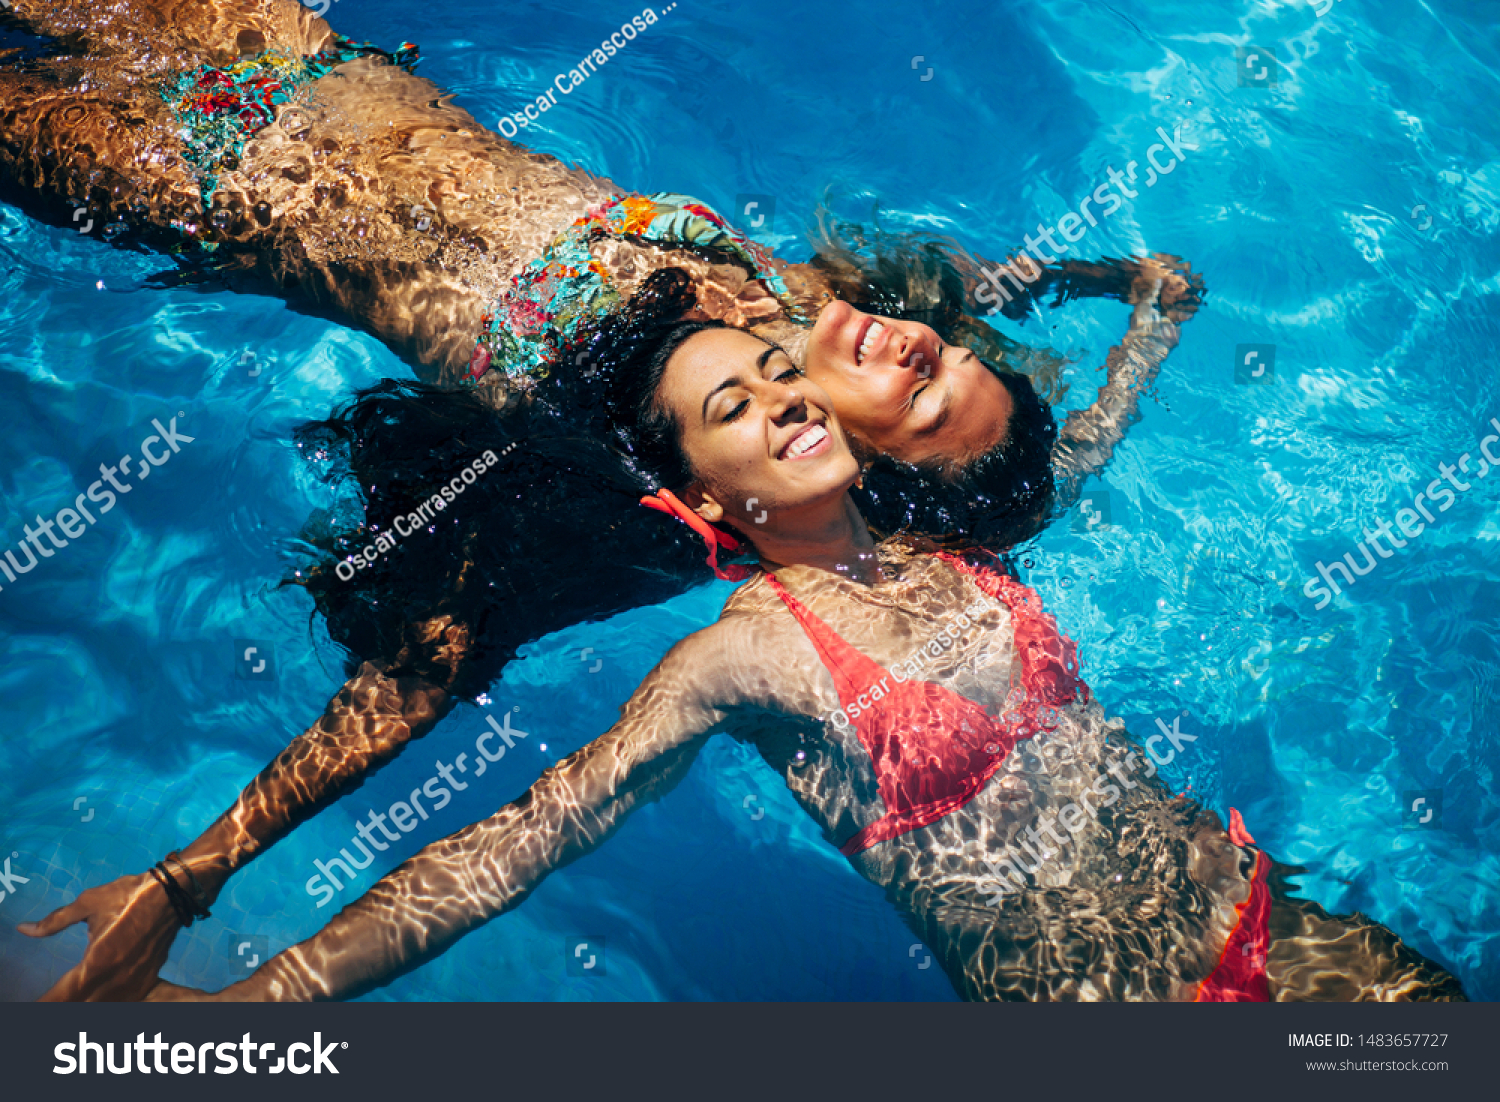 Lesbian swimming